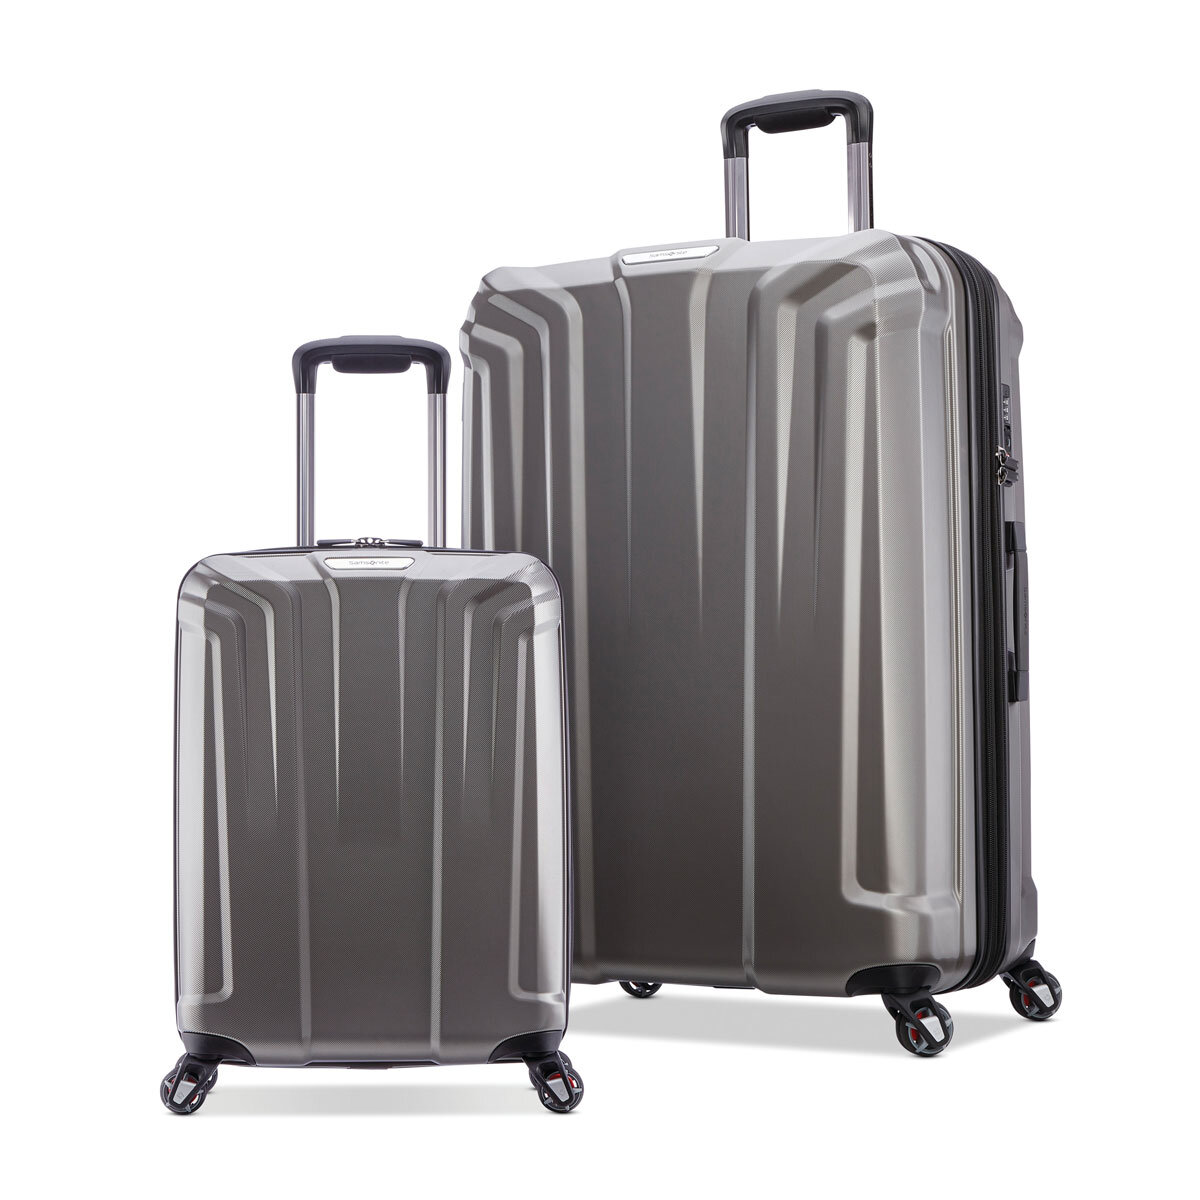 Samsonite Endure 2 Piece Hardside Luggage Set in Silver